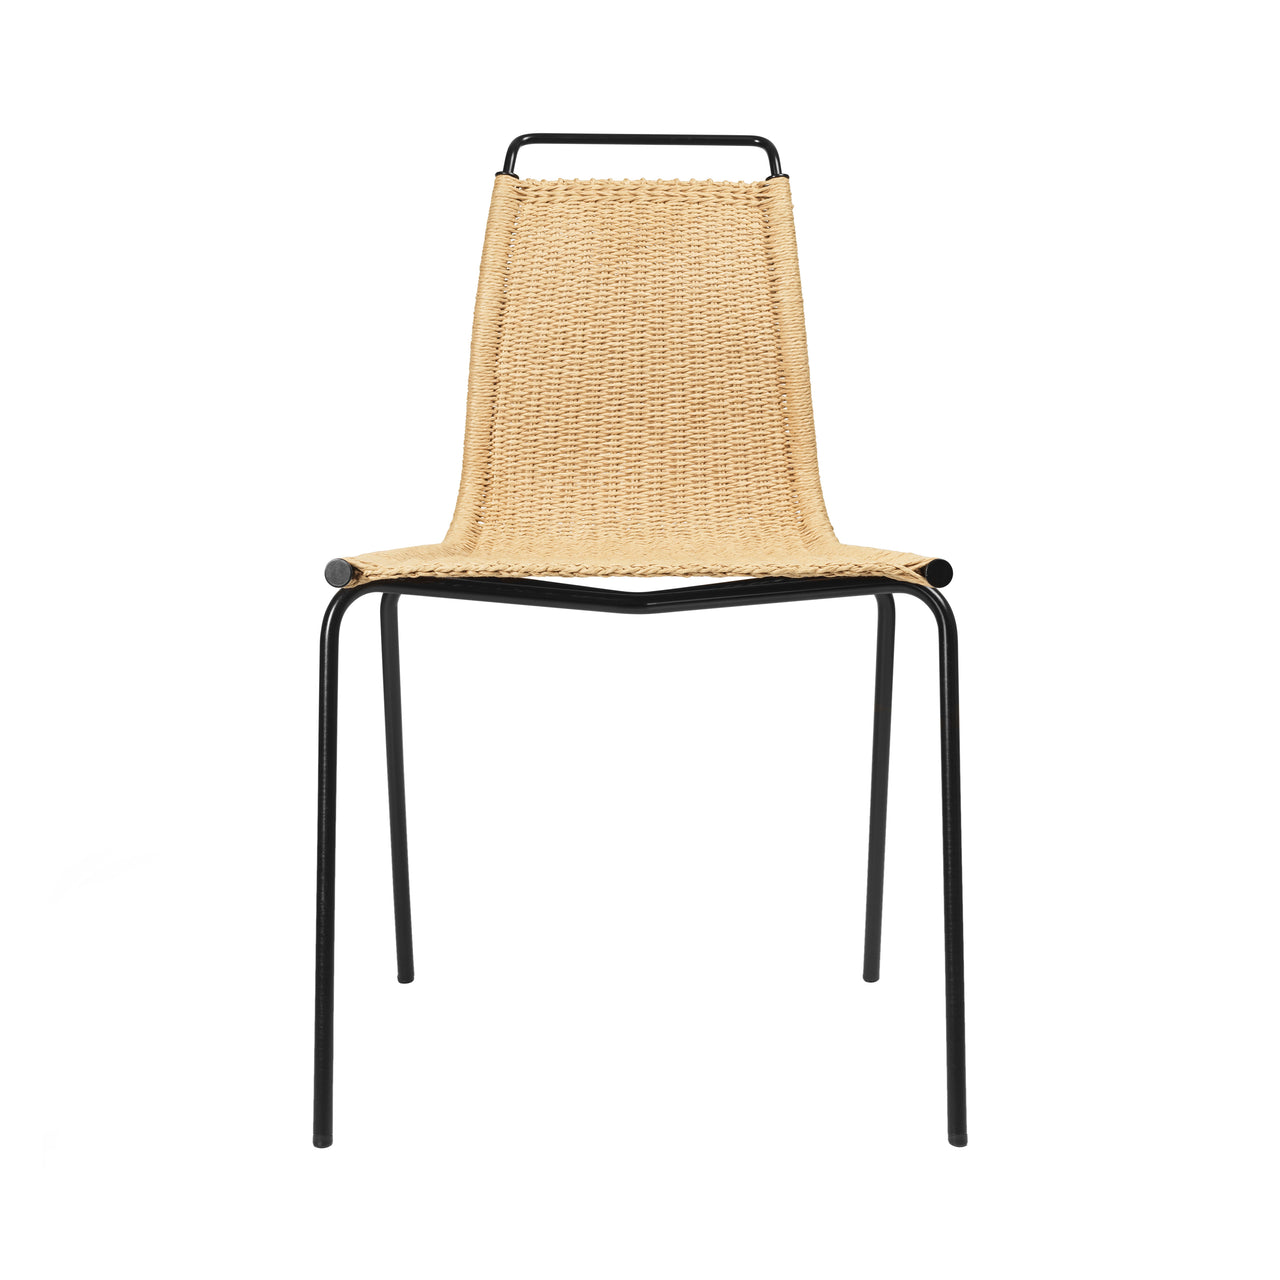 PK1 Chair: Black Powder-Coated Steel